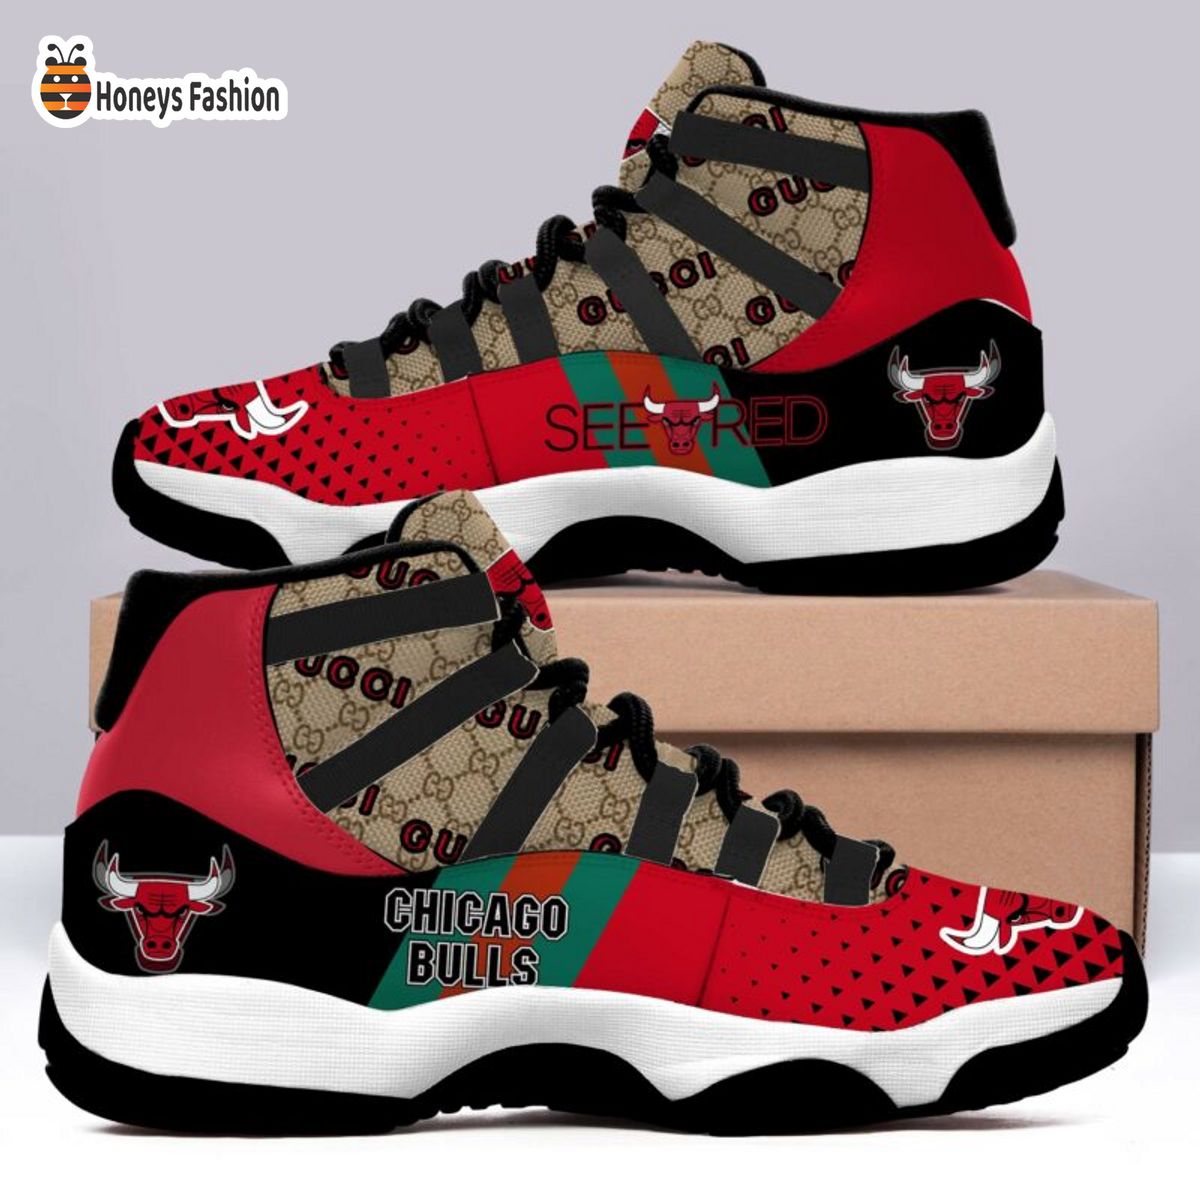 Chicago Bulls x Gucci Air Jordan 11 Sneaker